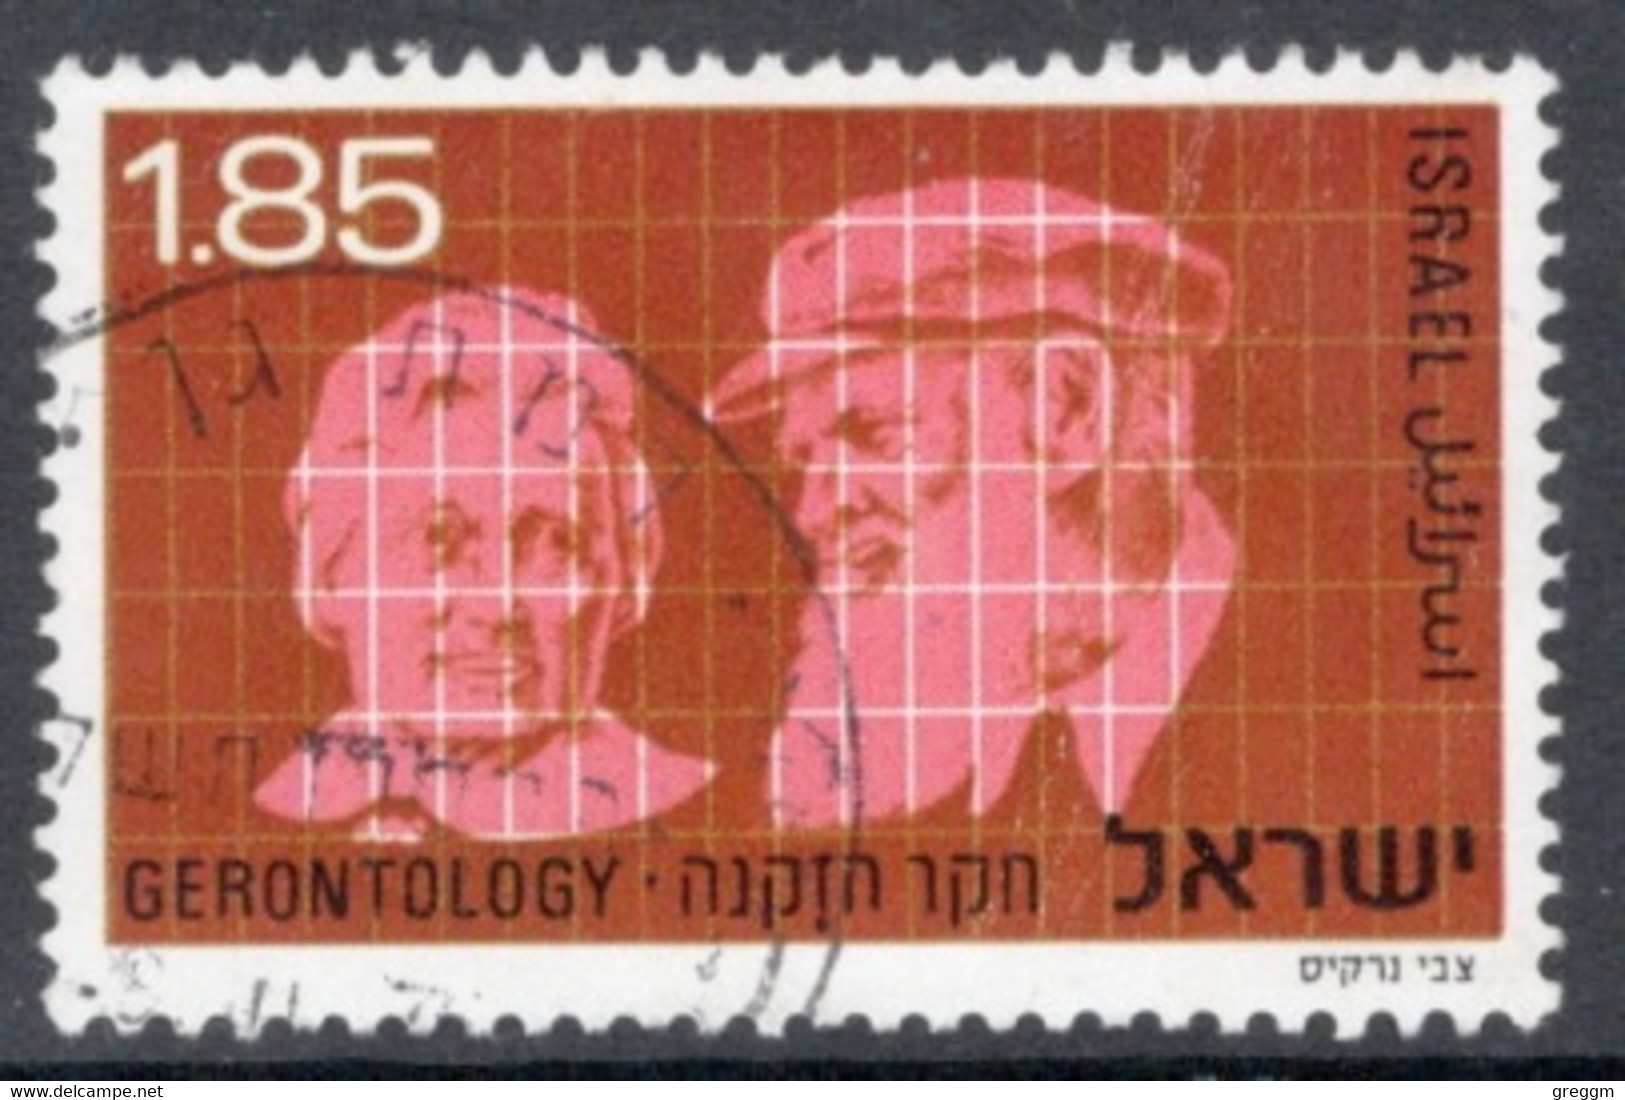 Israel 1975 Single Stamp Celebrating Geronthology Congress In Fine Used - Usati (senza Tab)